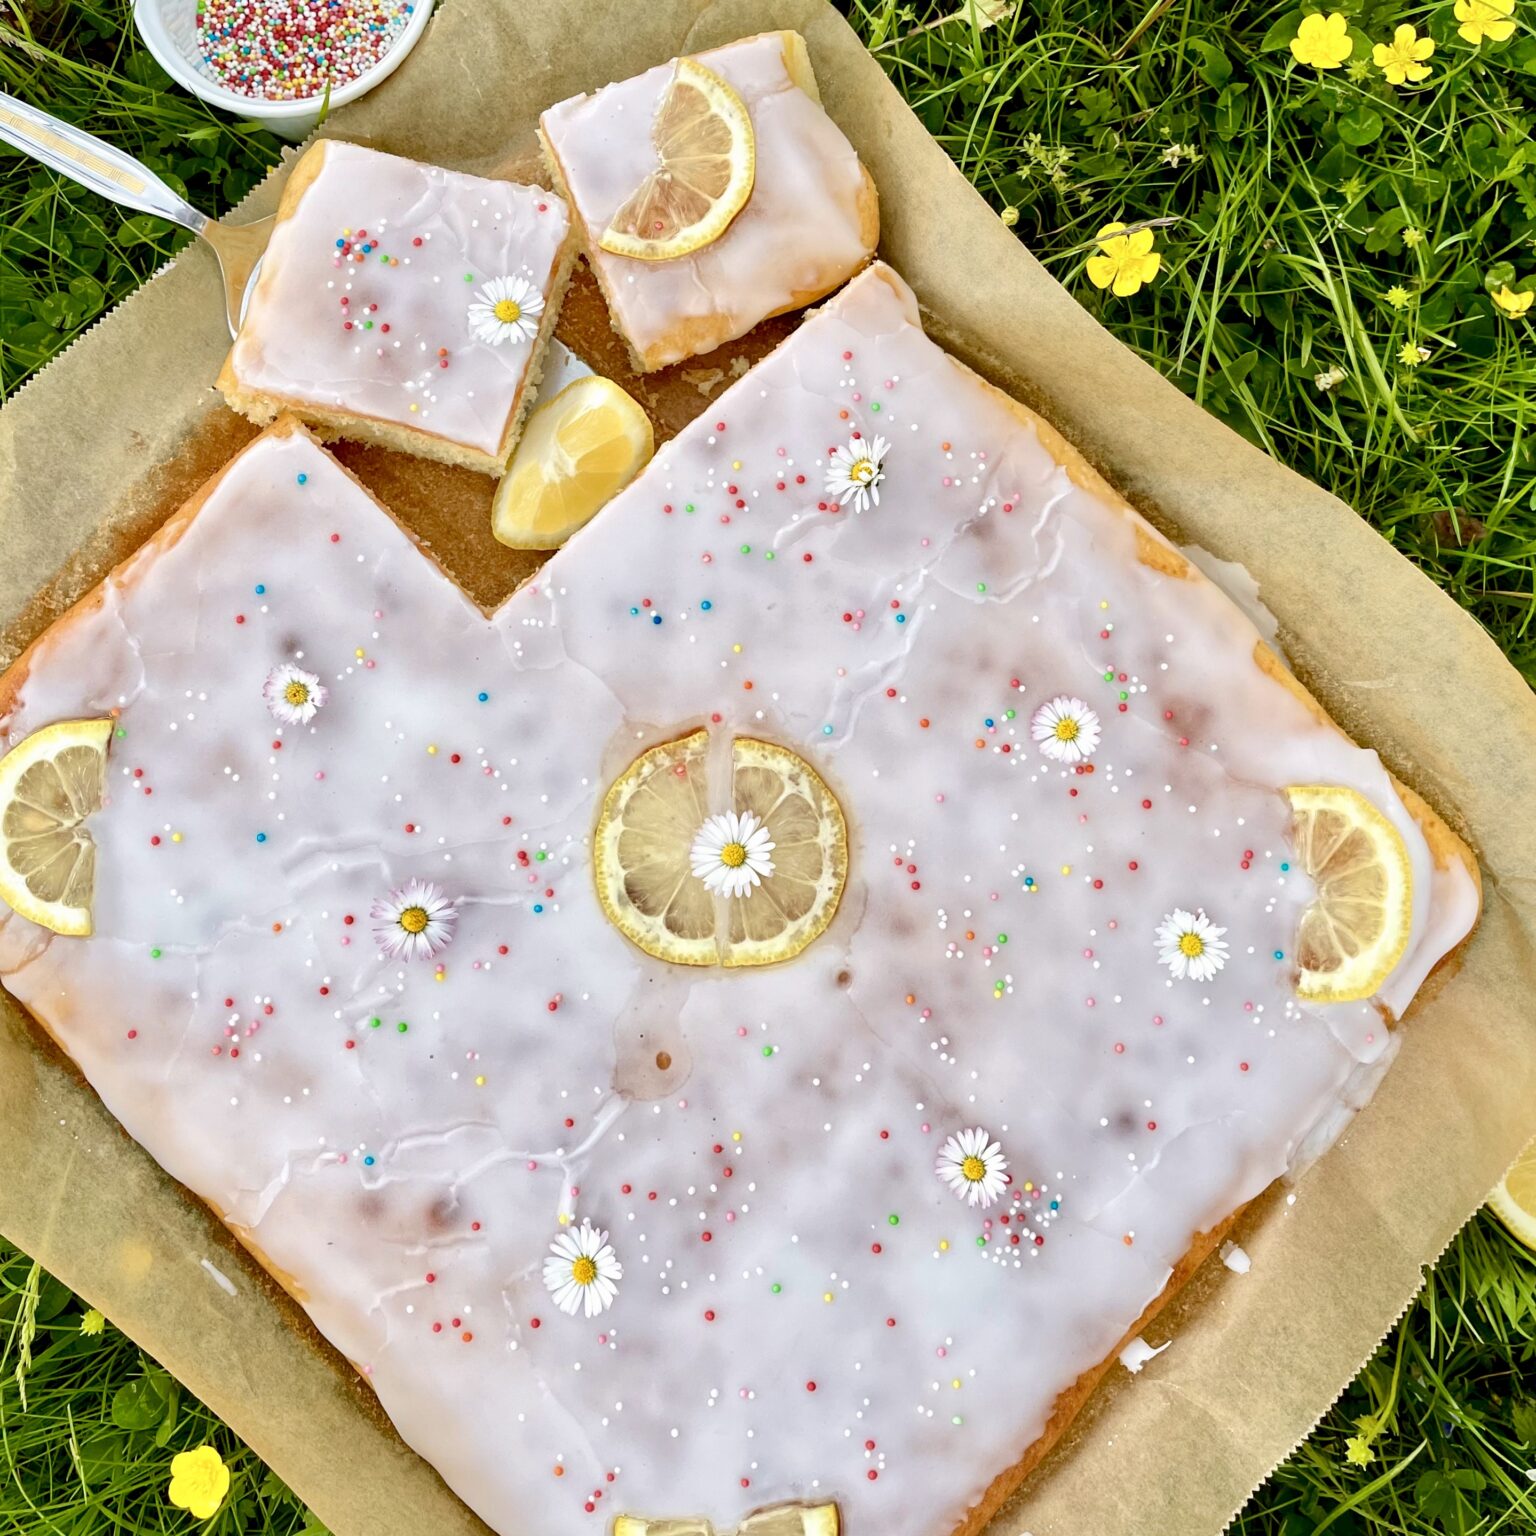 Zitronen-Blechkuchen mit Guss - Hunger auf Süßes